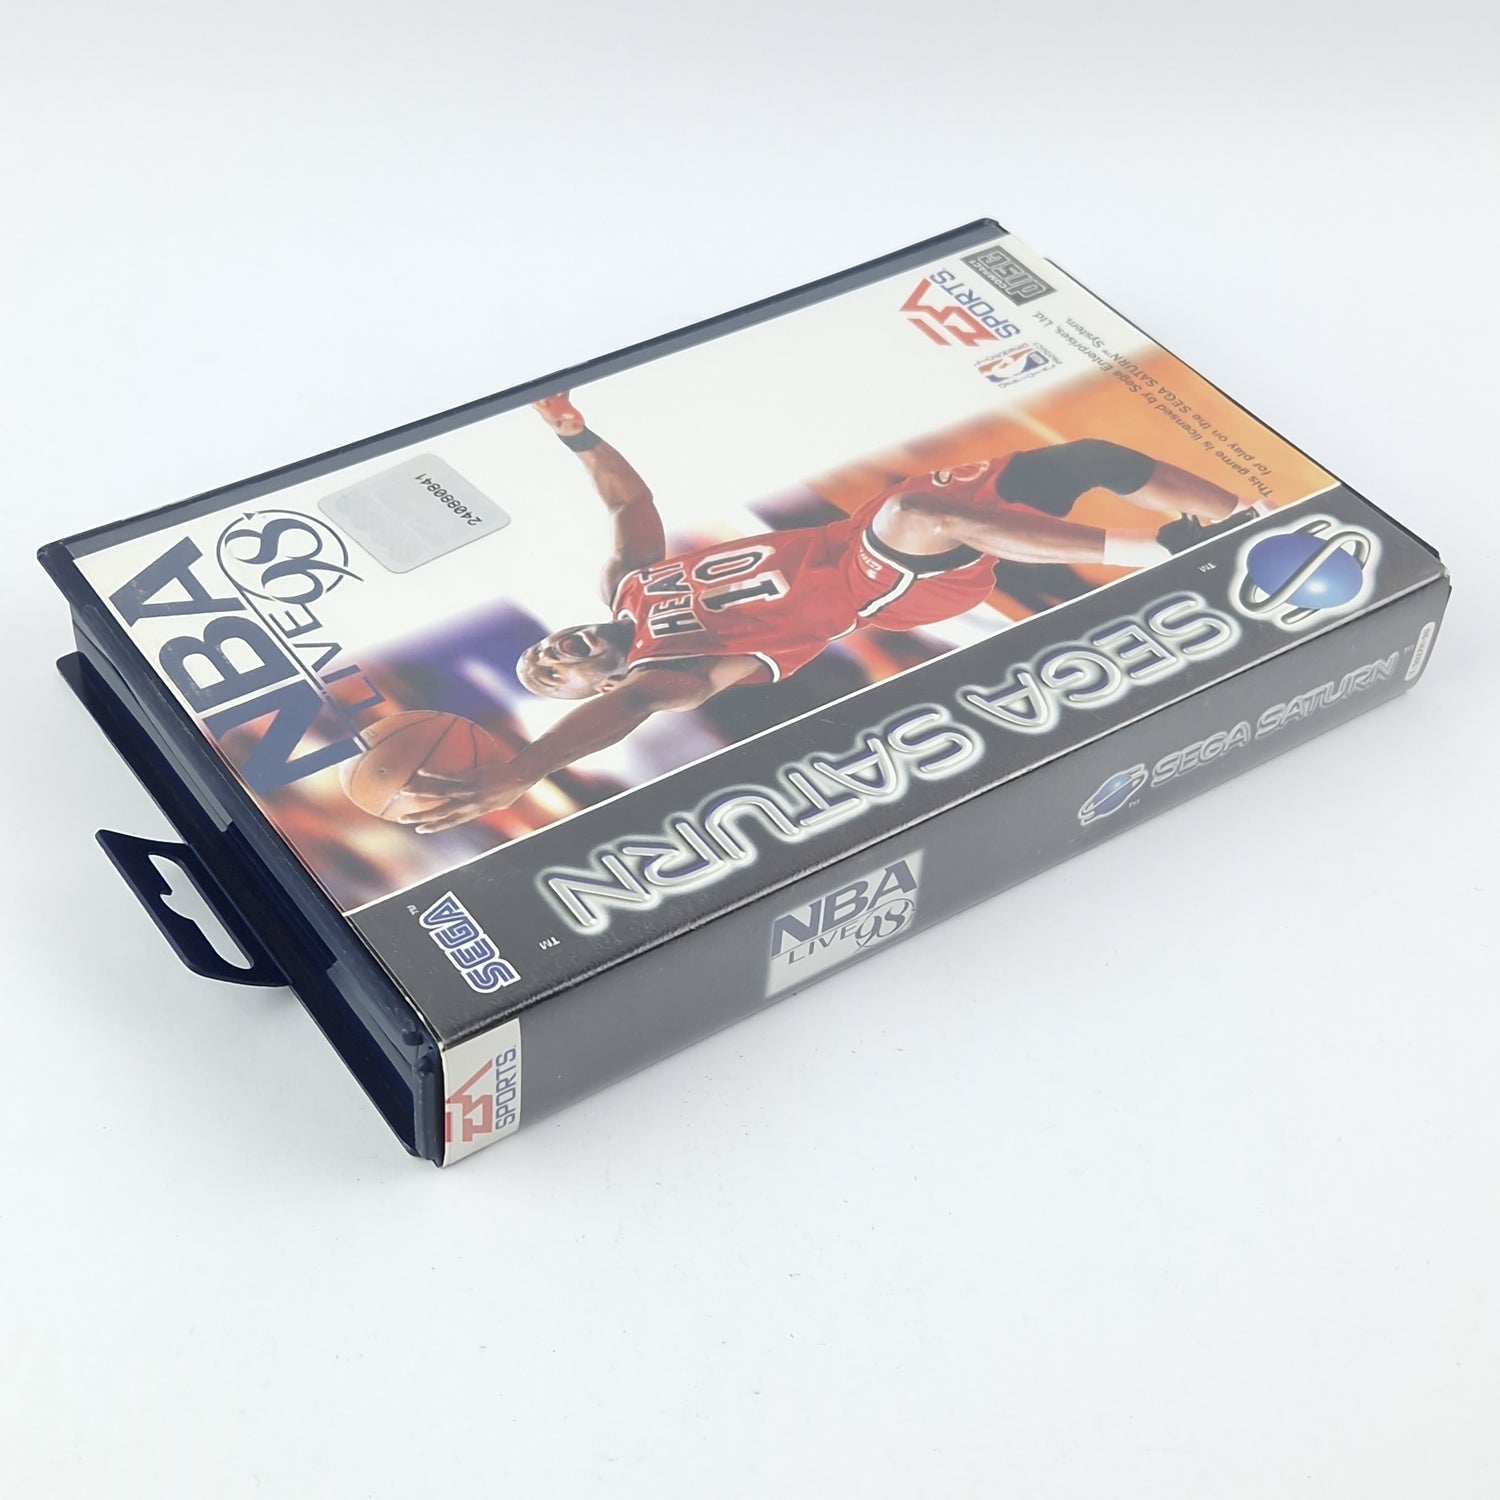 Sega Saturn Spiel : NBA Live 98 - CD Anleitung OVP / PAL Disk Basketball